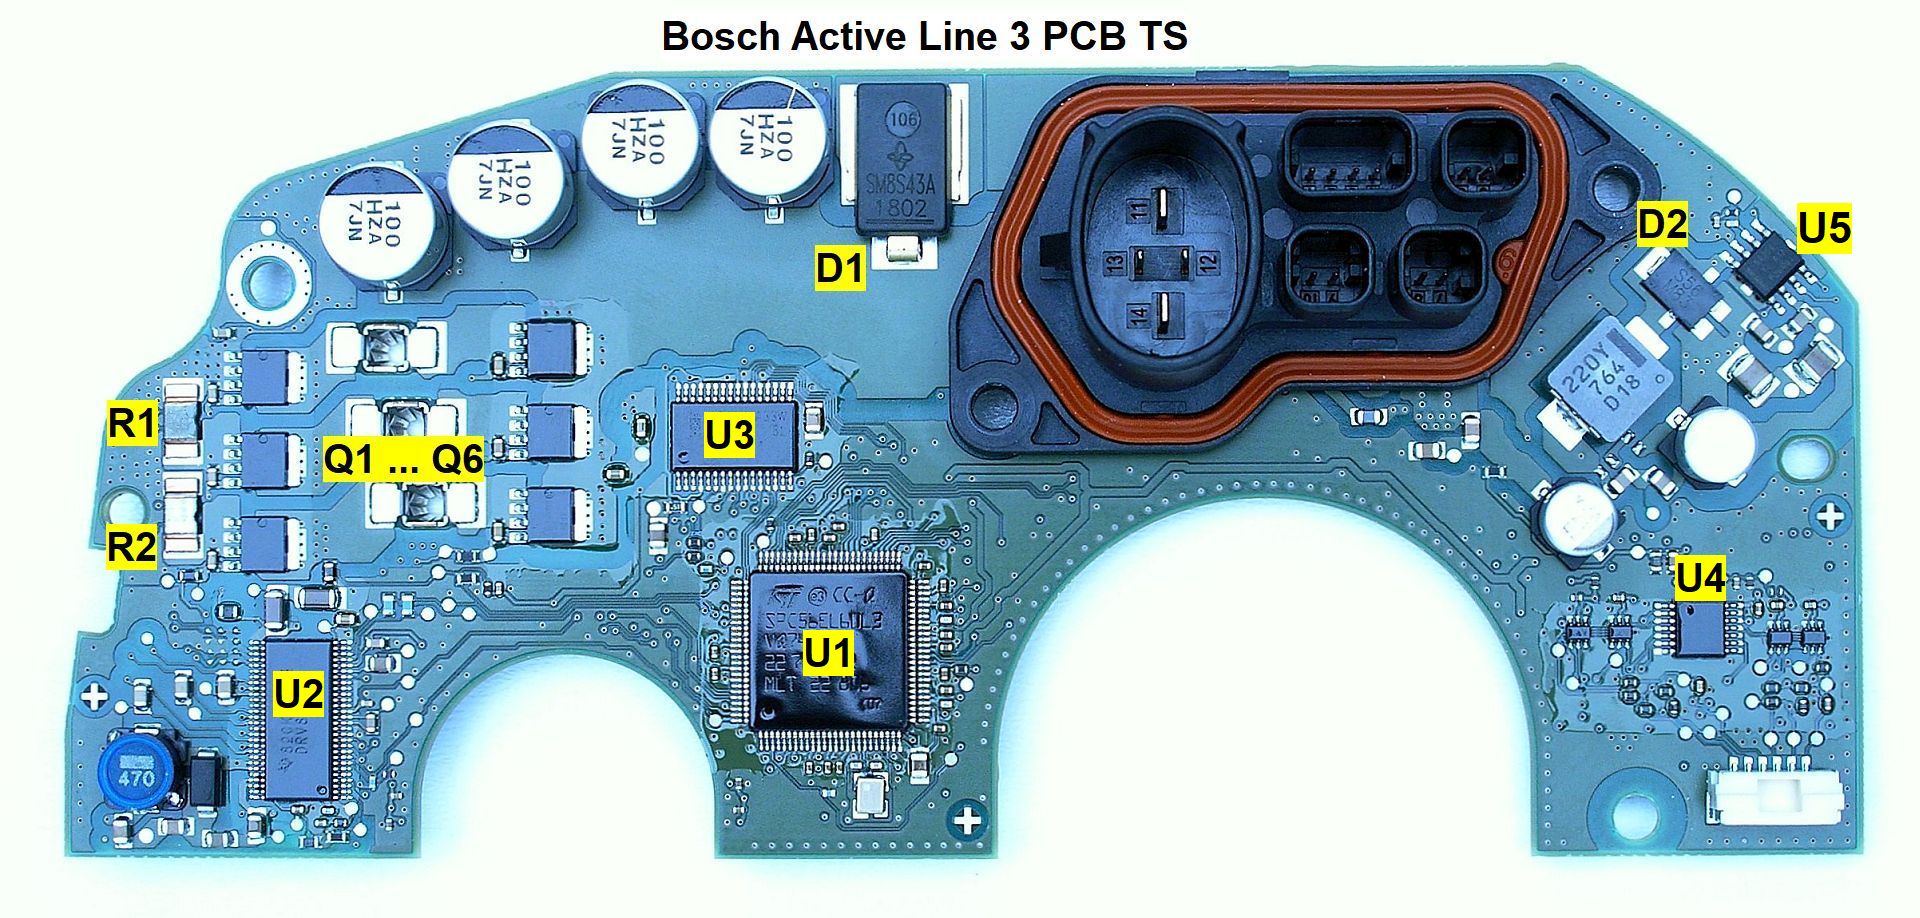 Bosch Active Line 3 mid-drive motor tear down | Endless Sphere DIY EV Forum